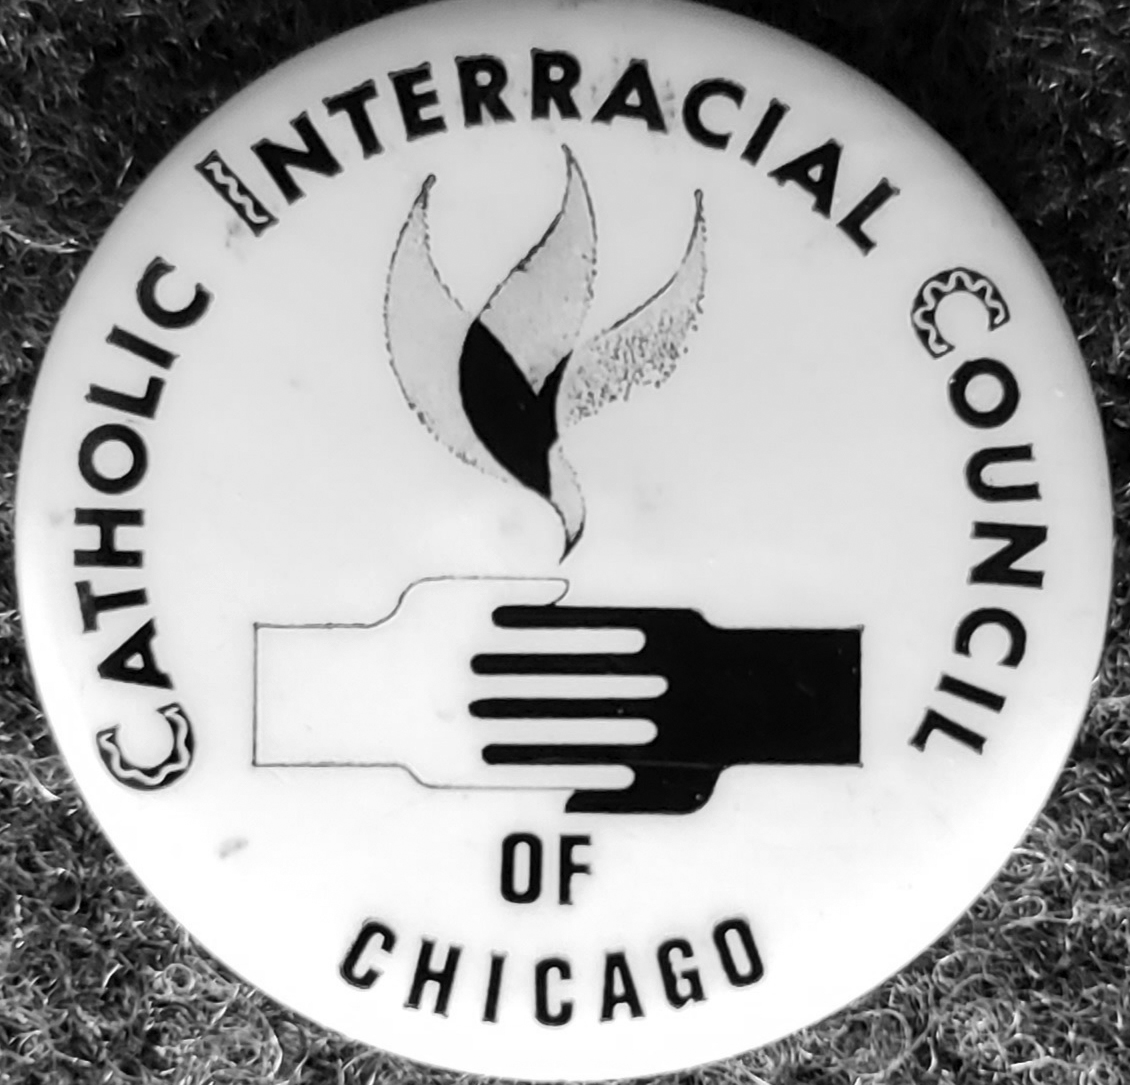 [Catholic Interracial Council pin]